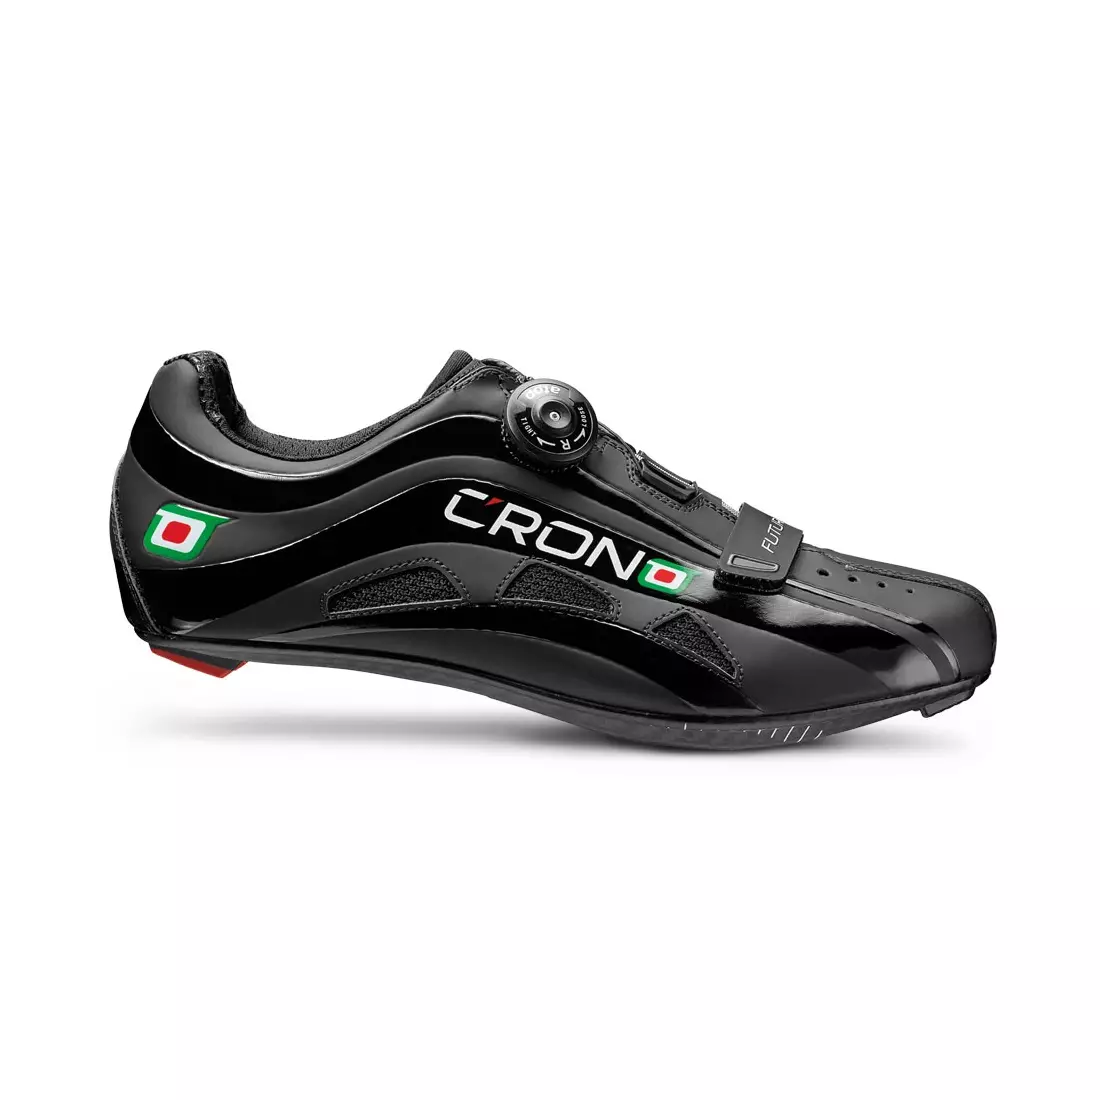 CRONO FUTURA NYLON - pantofi de ciclism rutier - culoare: Negru